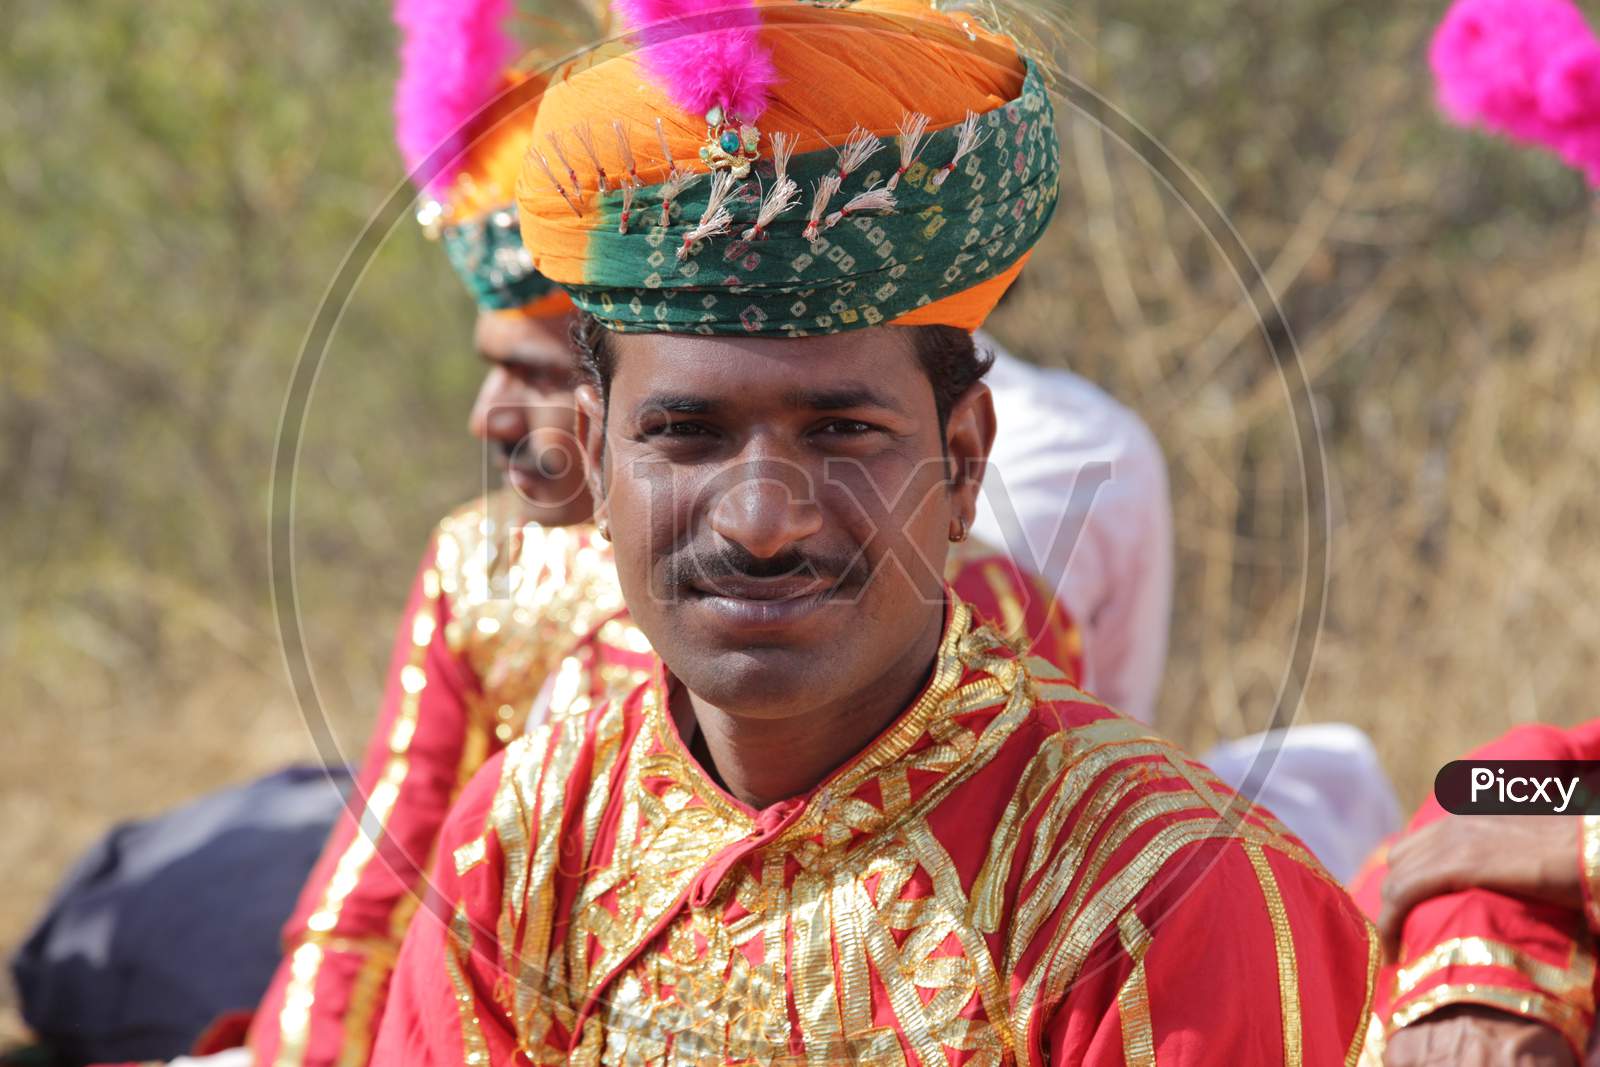 Rajasthani Man in Traditional Attire in Shilpgram Fair, Udaipur, Rajasthan